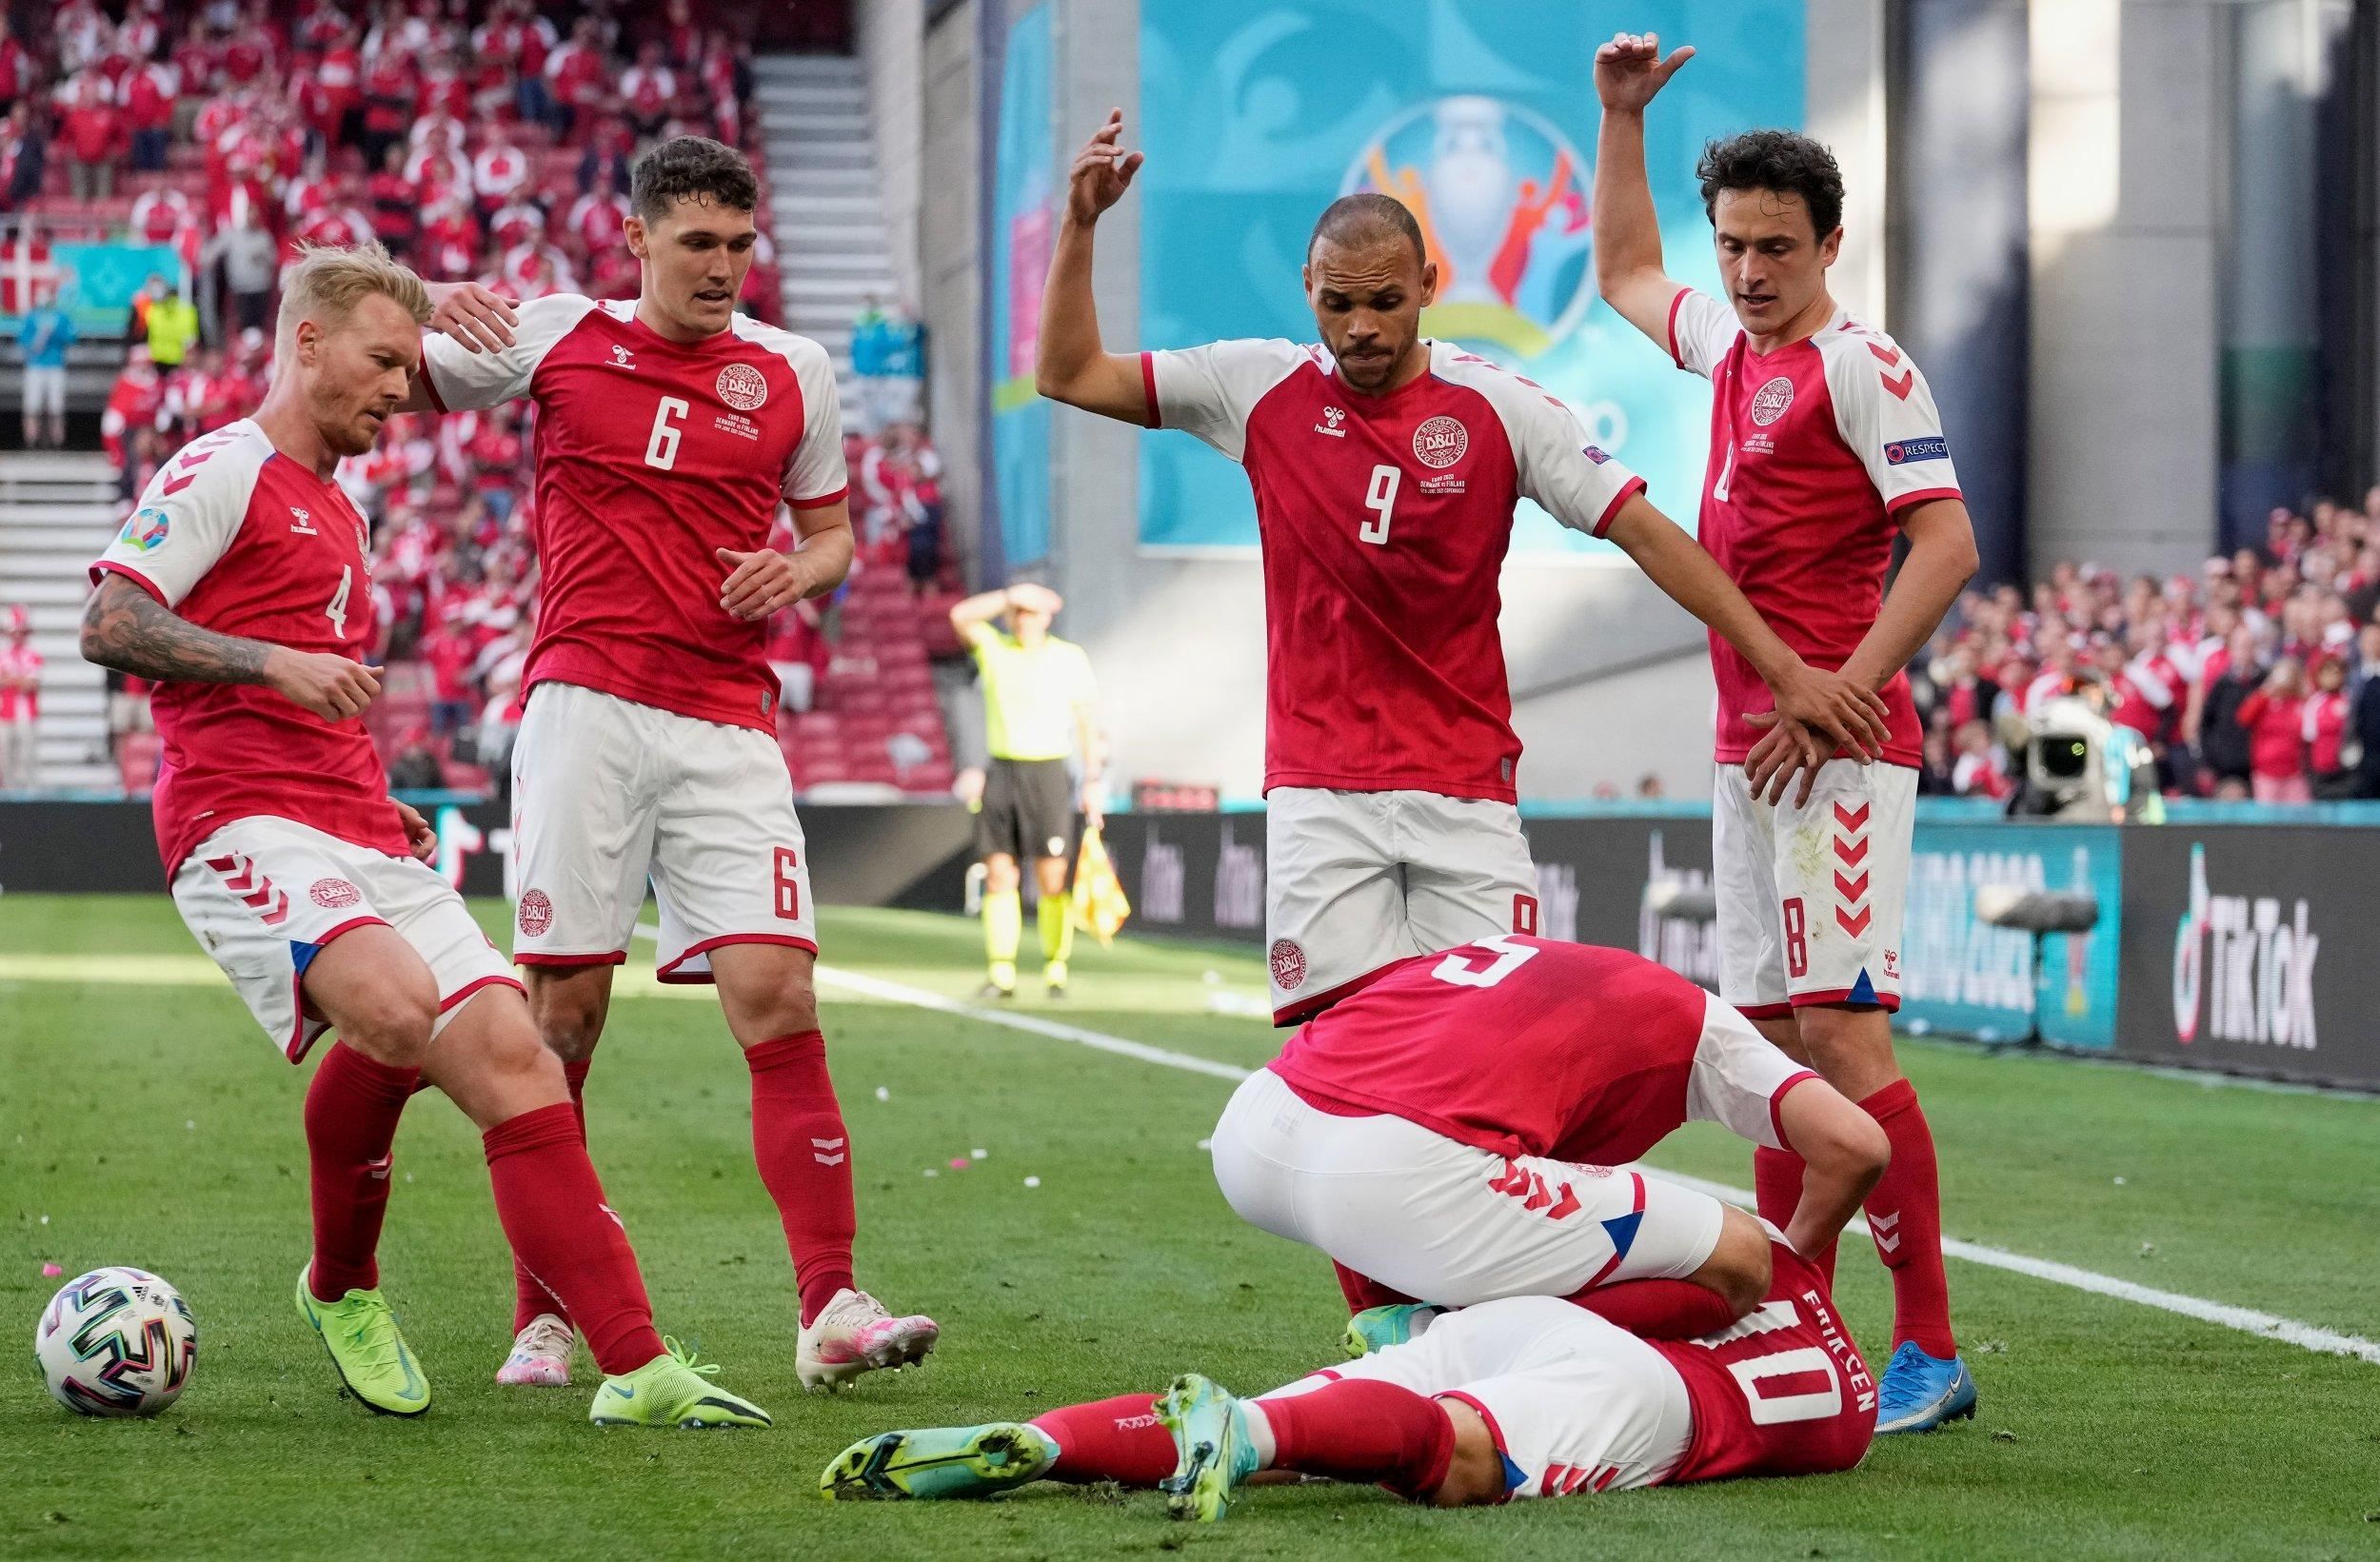 УЕФА пригрозил Дании техническим поражением после инцидента с Эриксеном